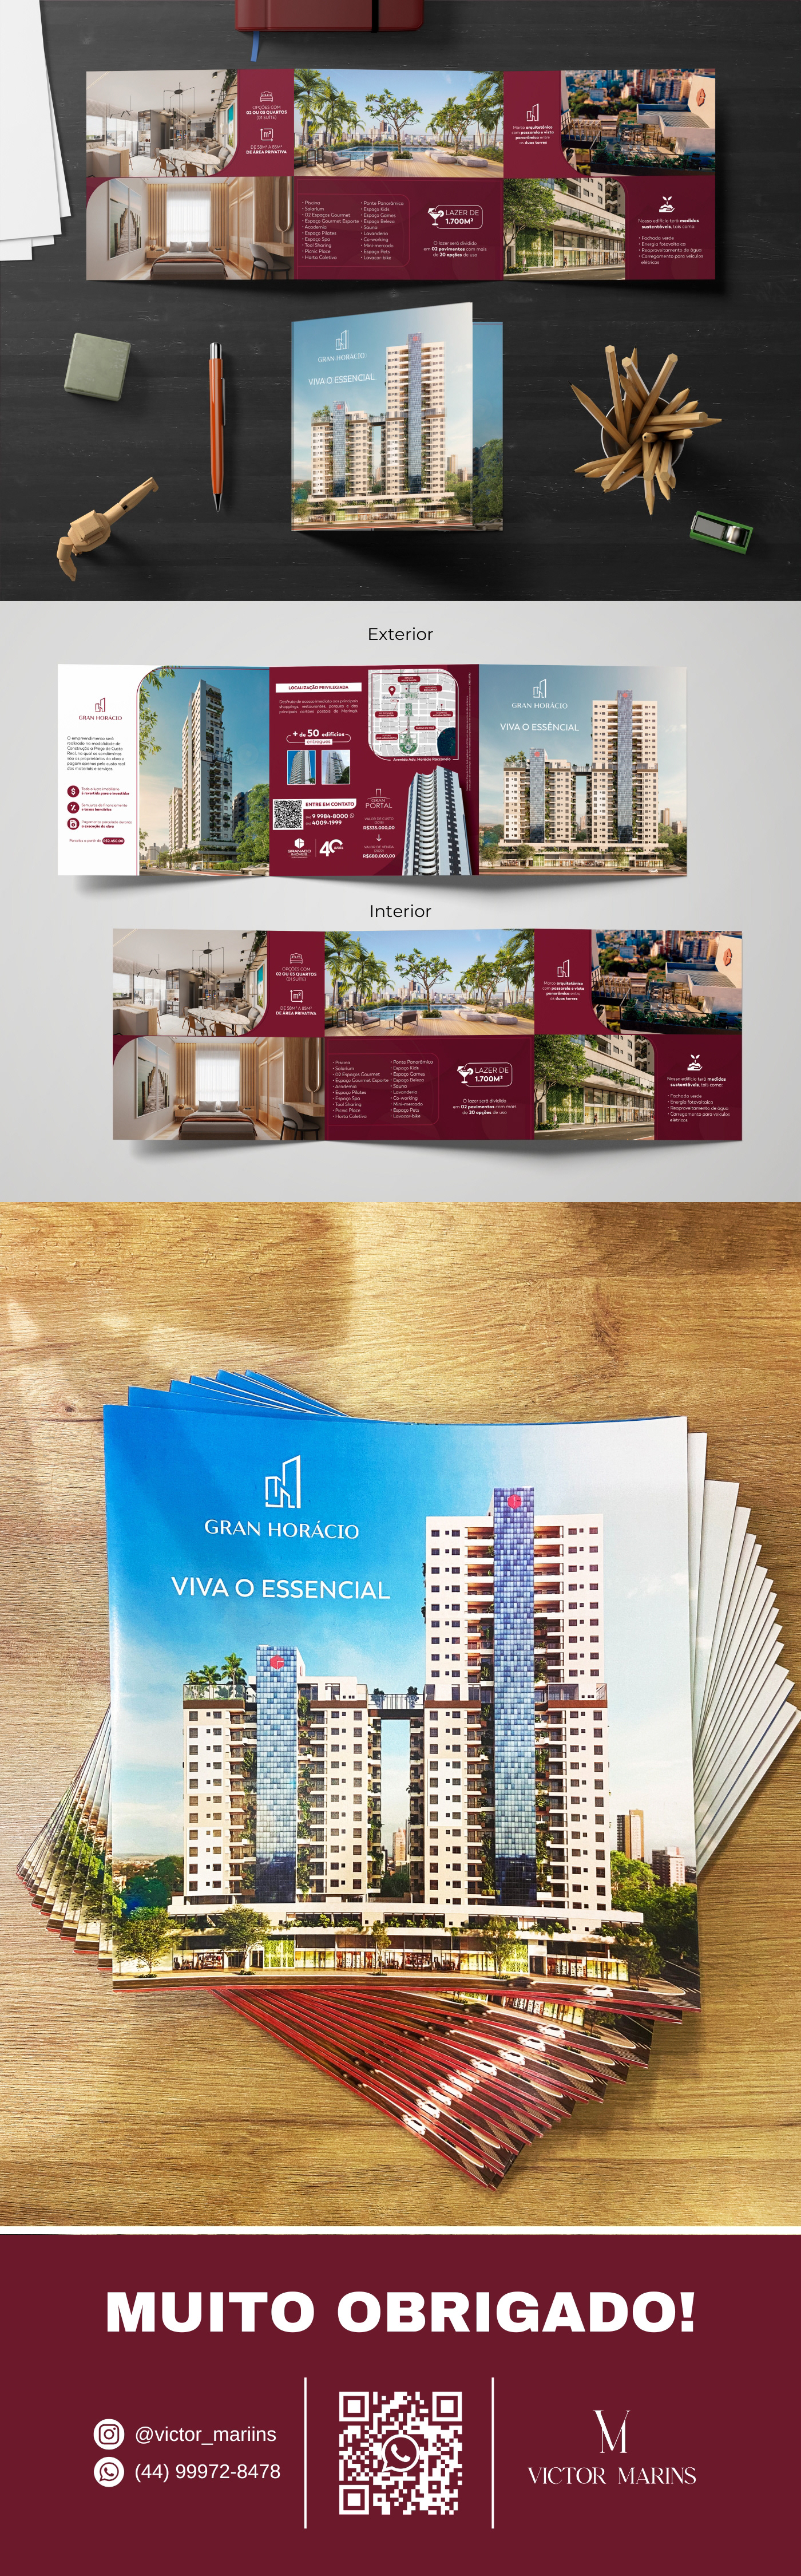 construction building architecture Render visualization folder flyer designer graphic marketing  